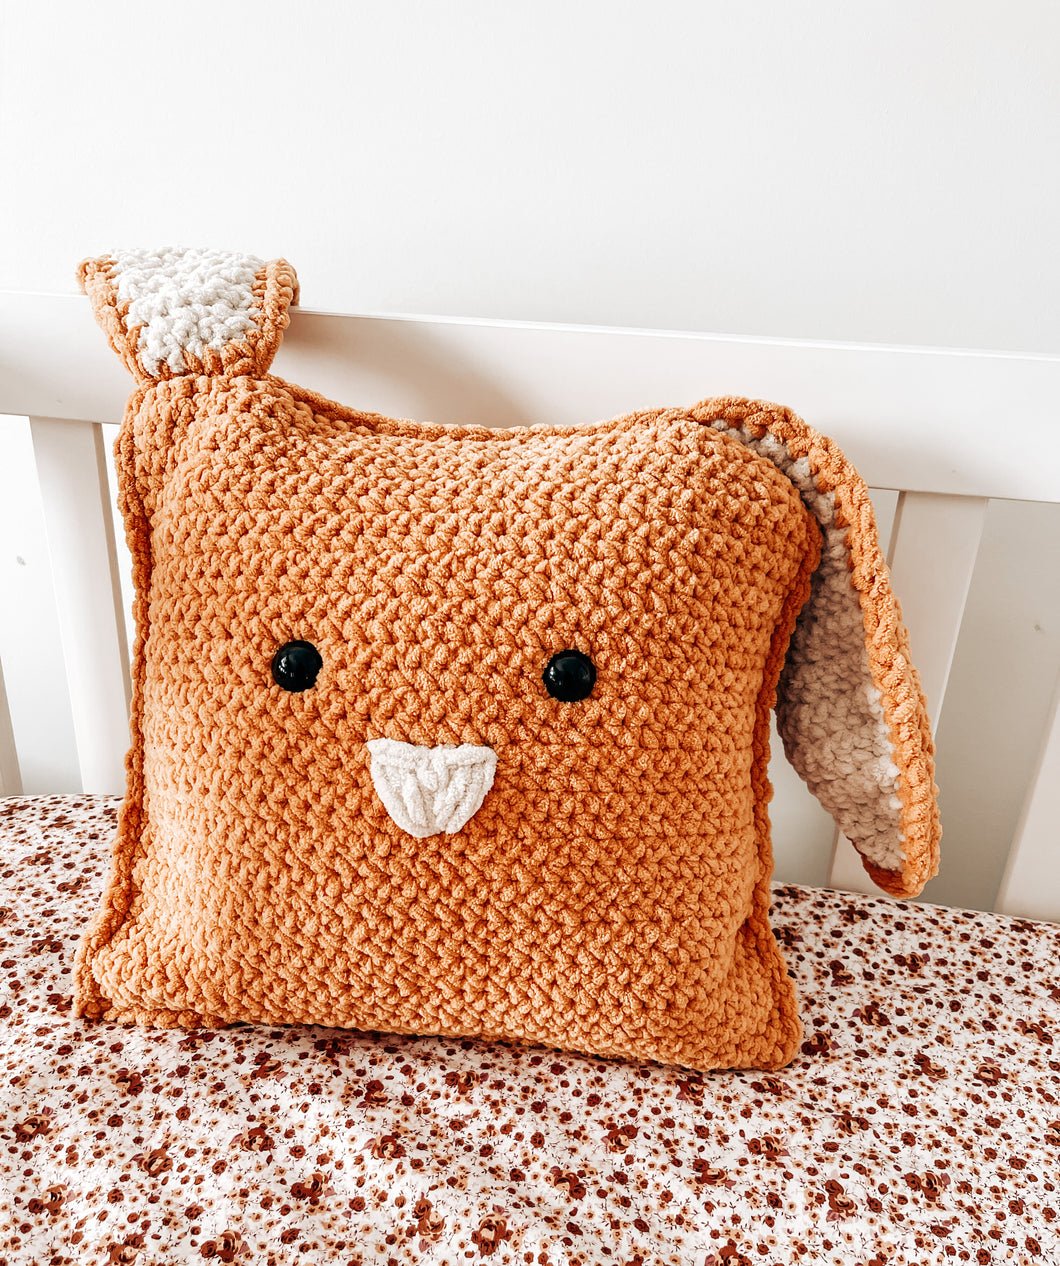 Sweet Bunny Crochet Pattern - Medium size